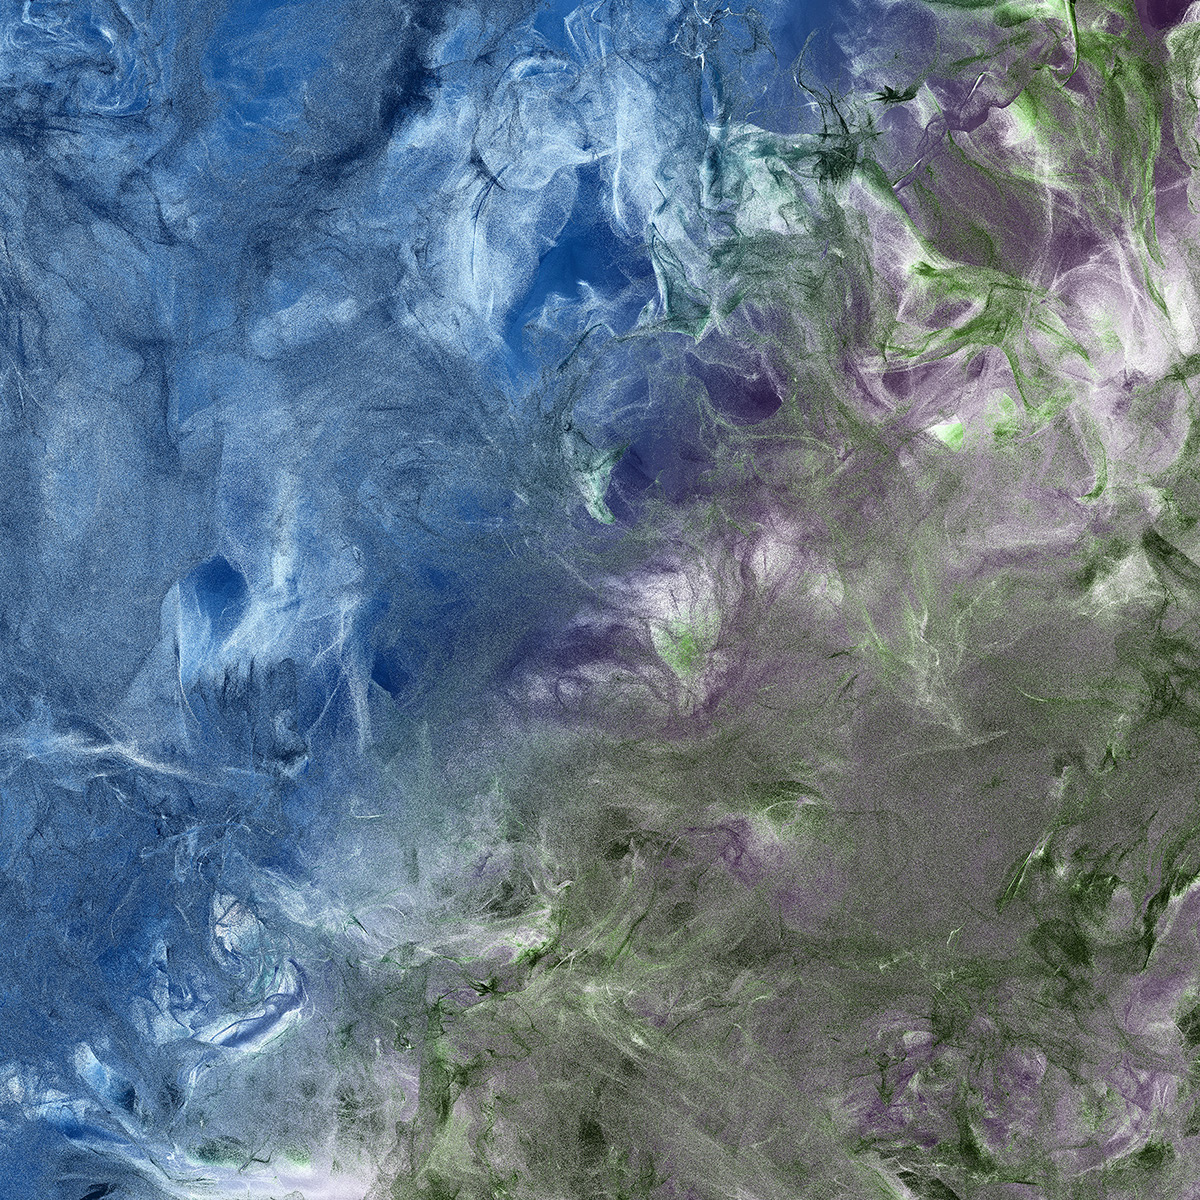 teun van der zalm salmonick atelier particles art digital abstract points water weather fire Nature red blue